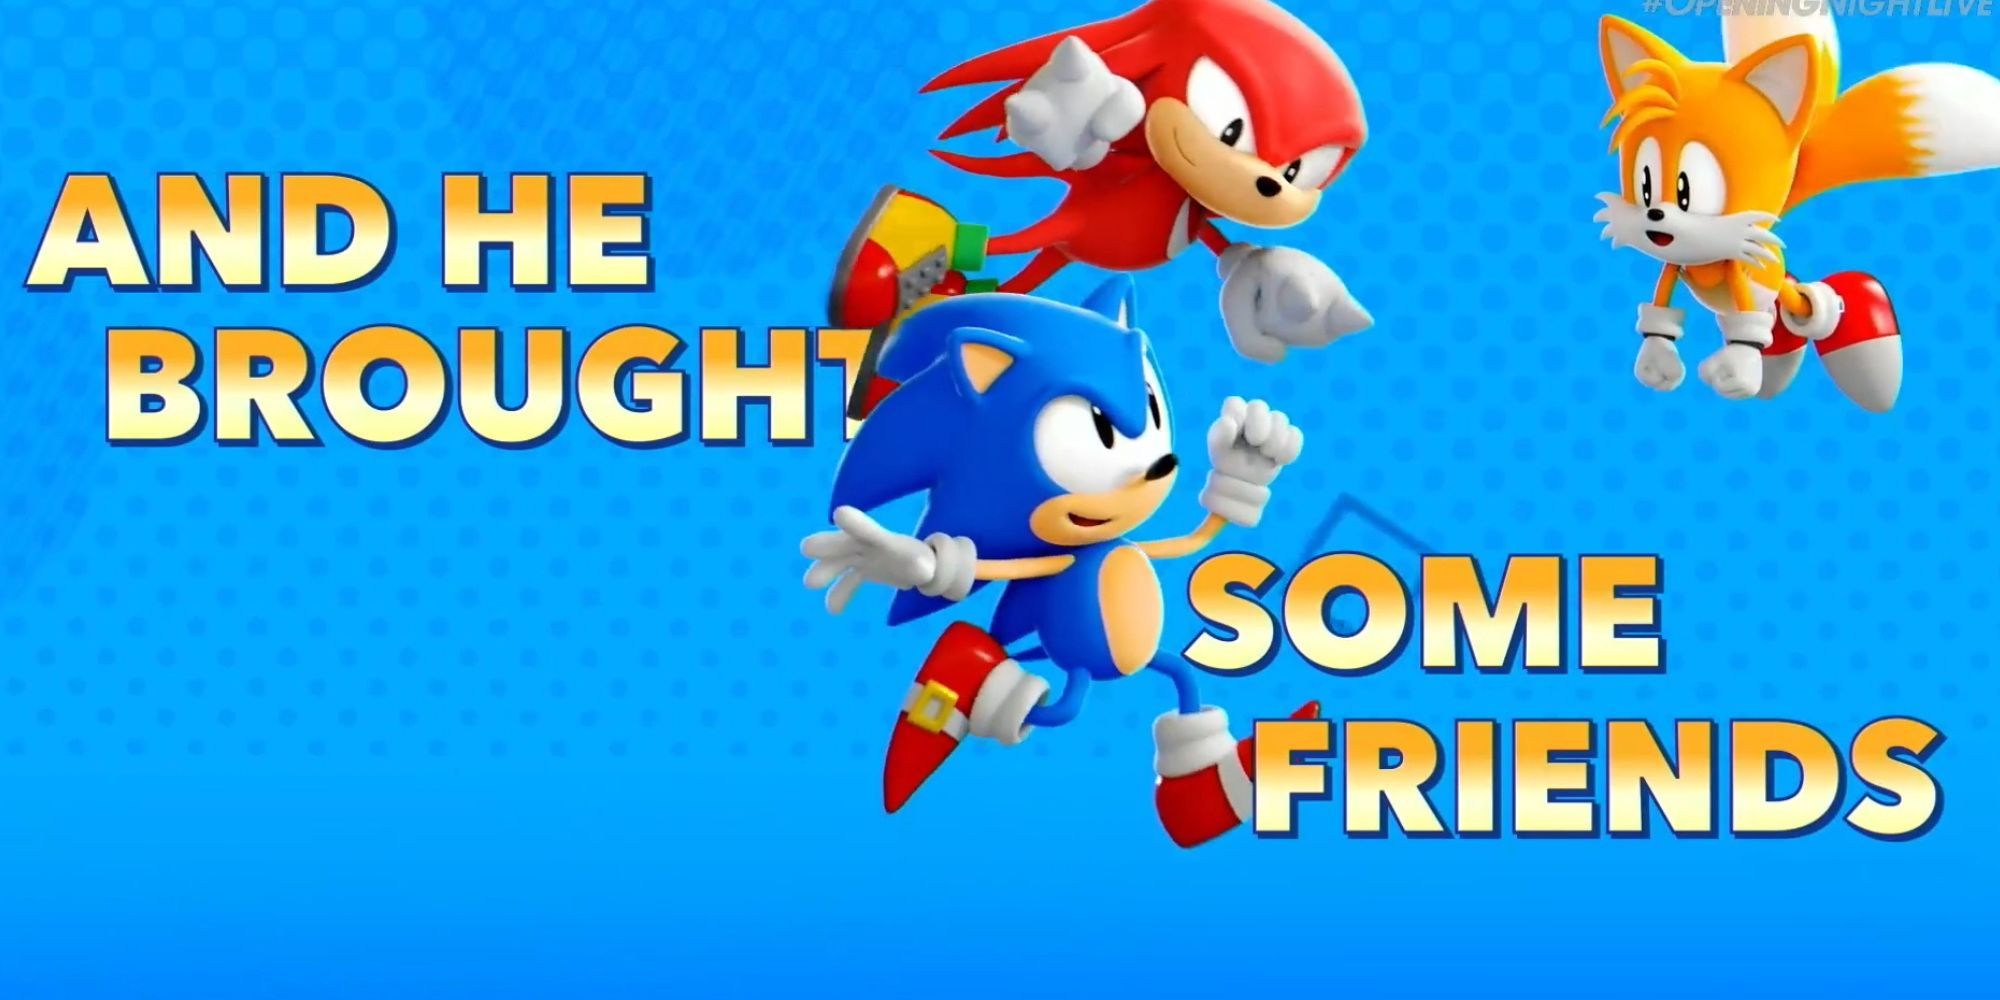 Sonic Superstars Official Announcement Trailer